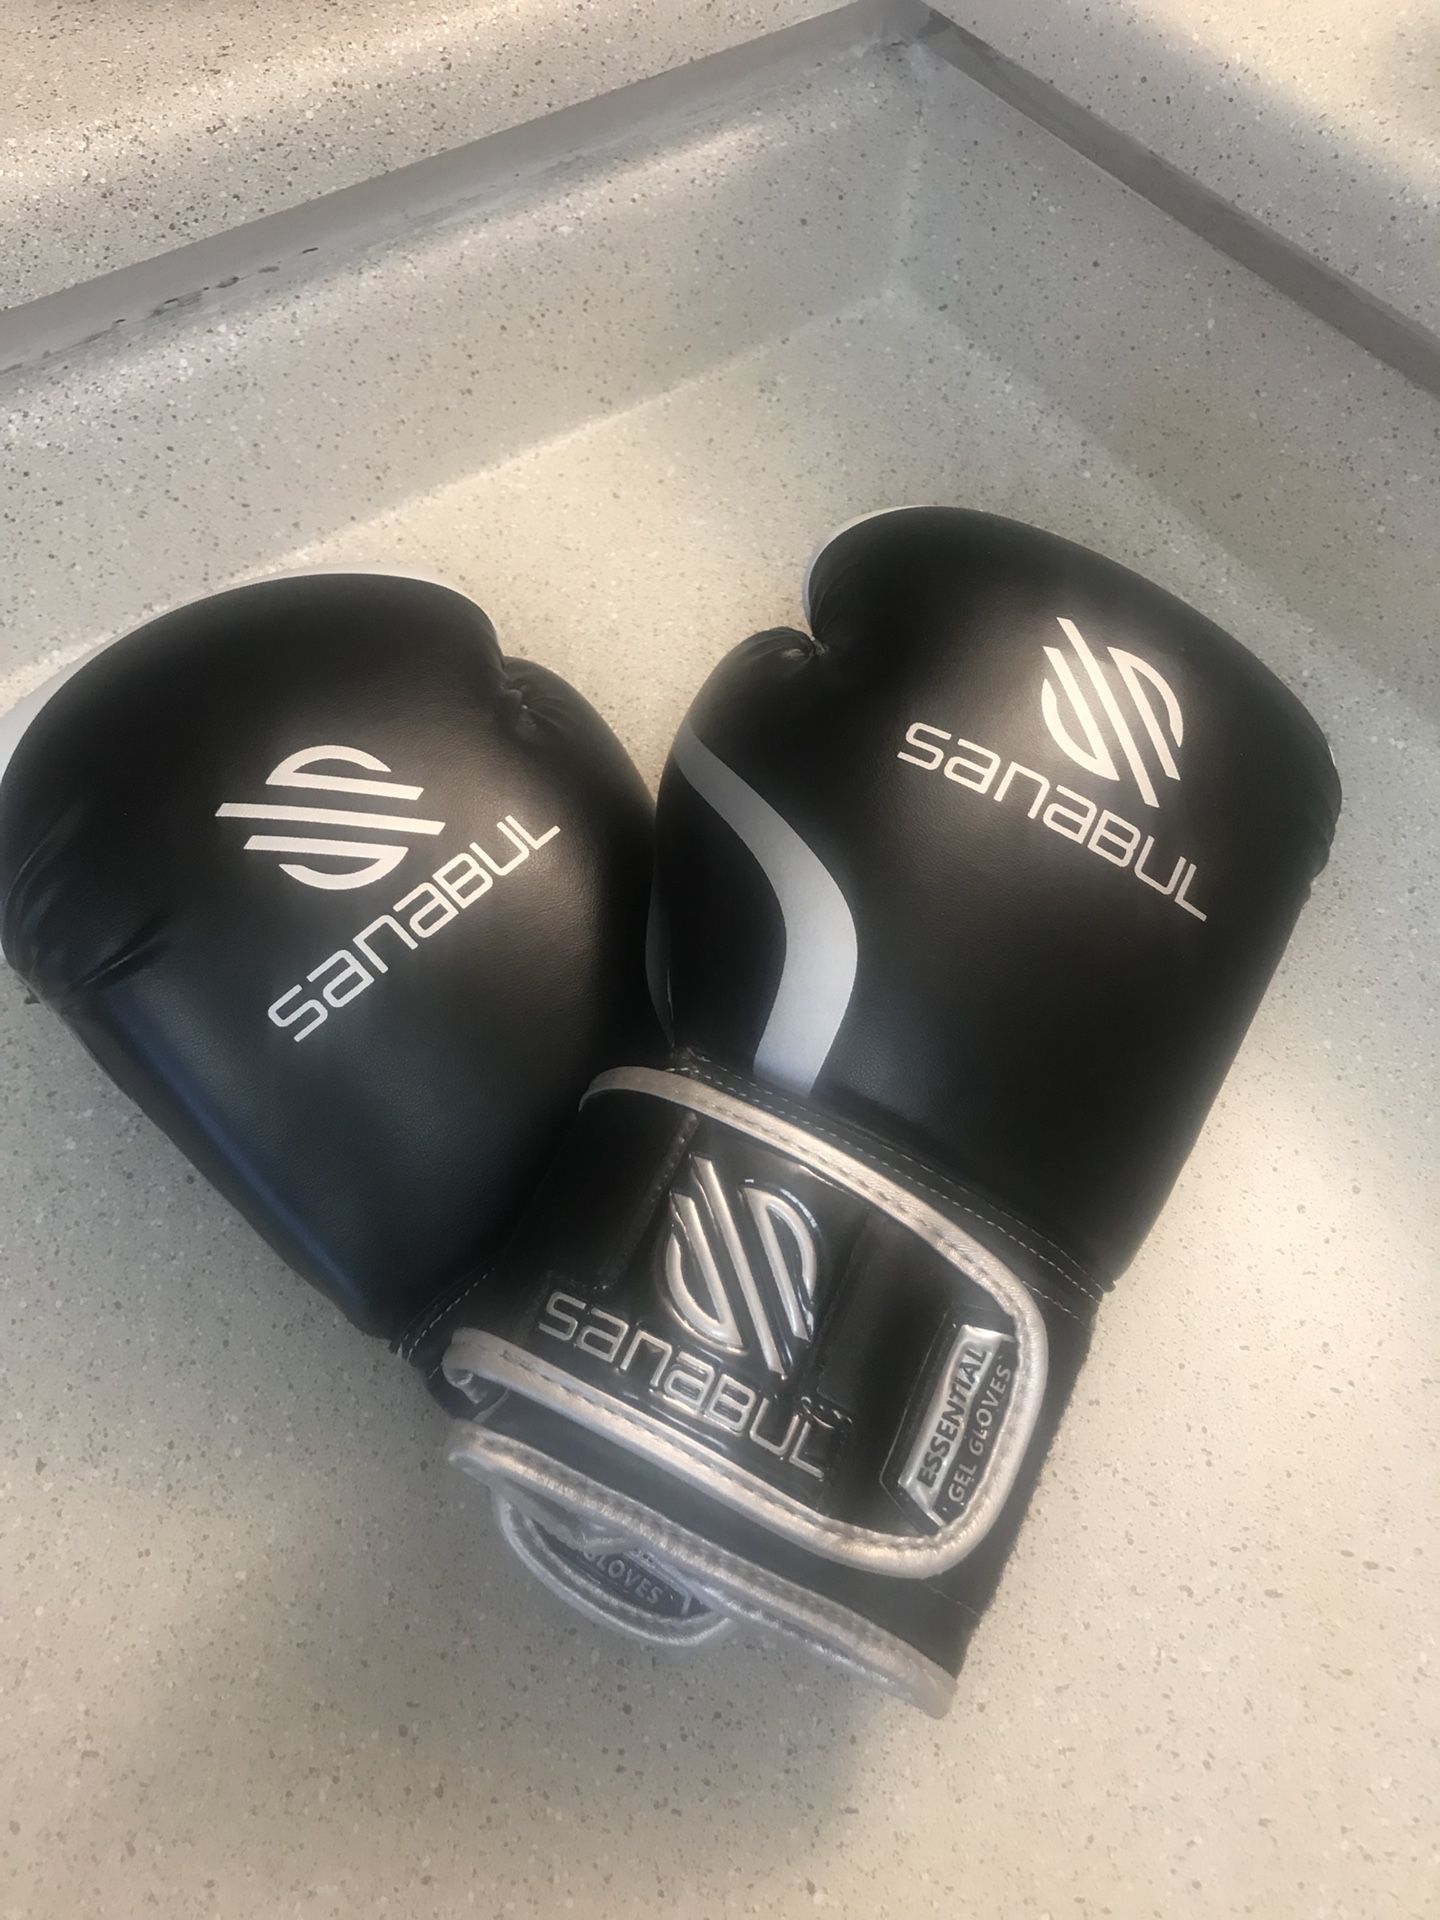 Sanabul Boxing Gloves 12oz *Like New*